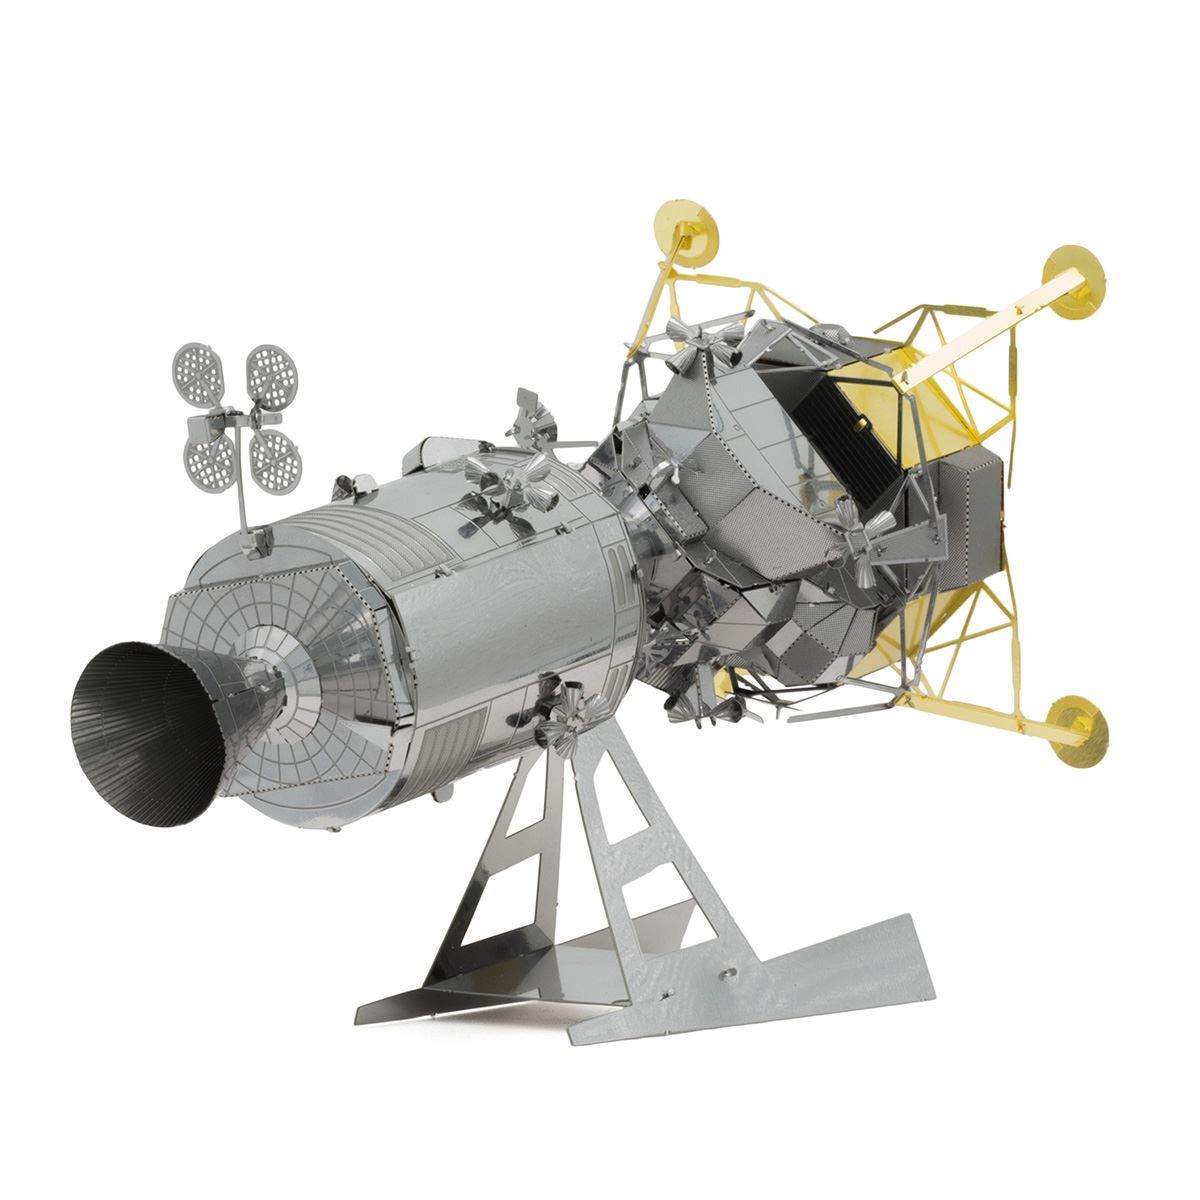 Fascinations Metal Earth Apollo Lunar Module Laser Cut 3D Metal Model Kit 